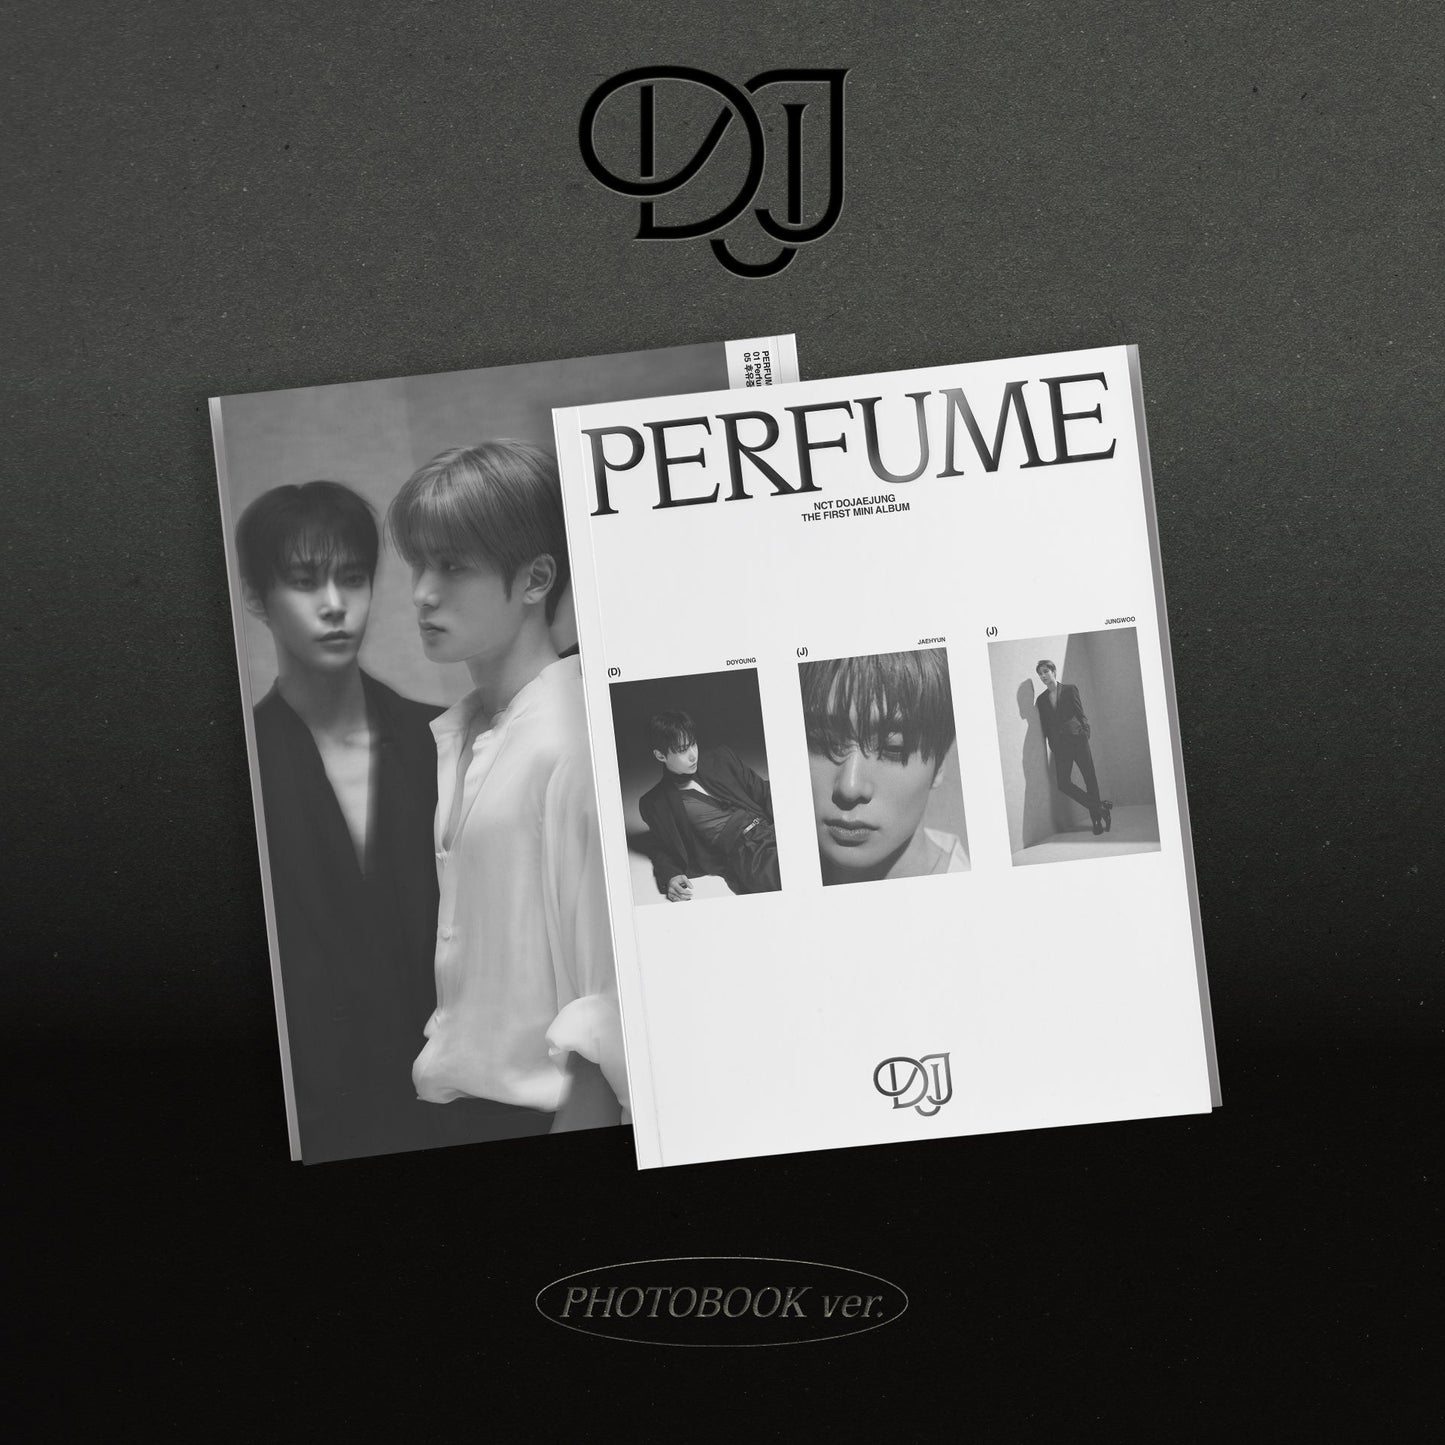 NCT DOJAEJUNG 1ST MINI ALBUM 'PERFUME' (PHOTOBOOK) COVER